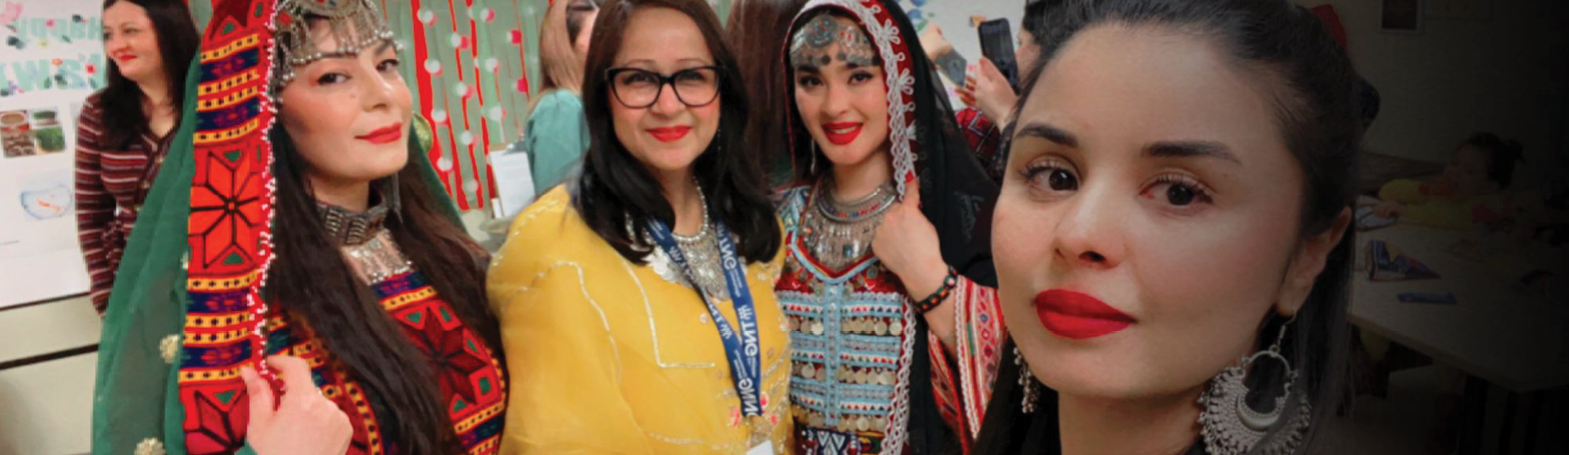 Persian women celebrating